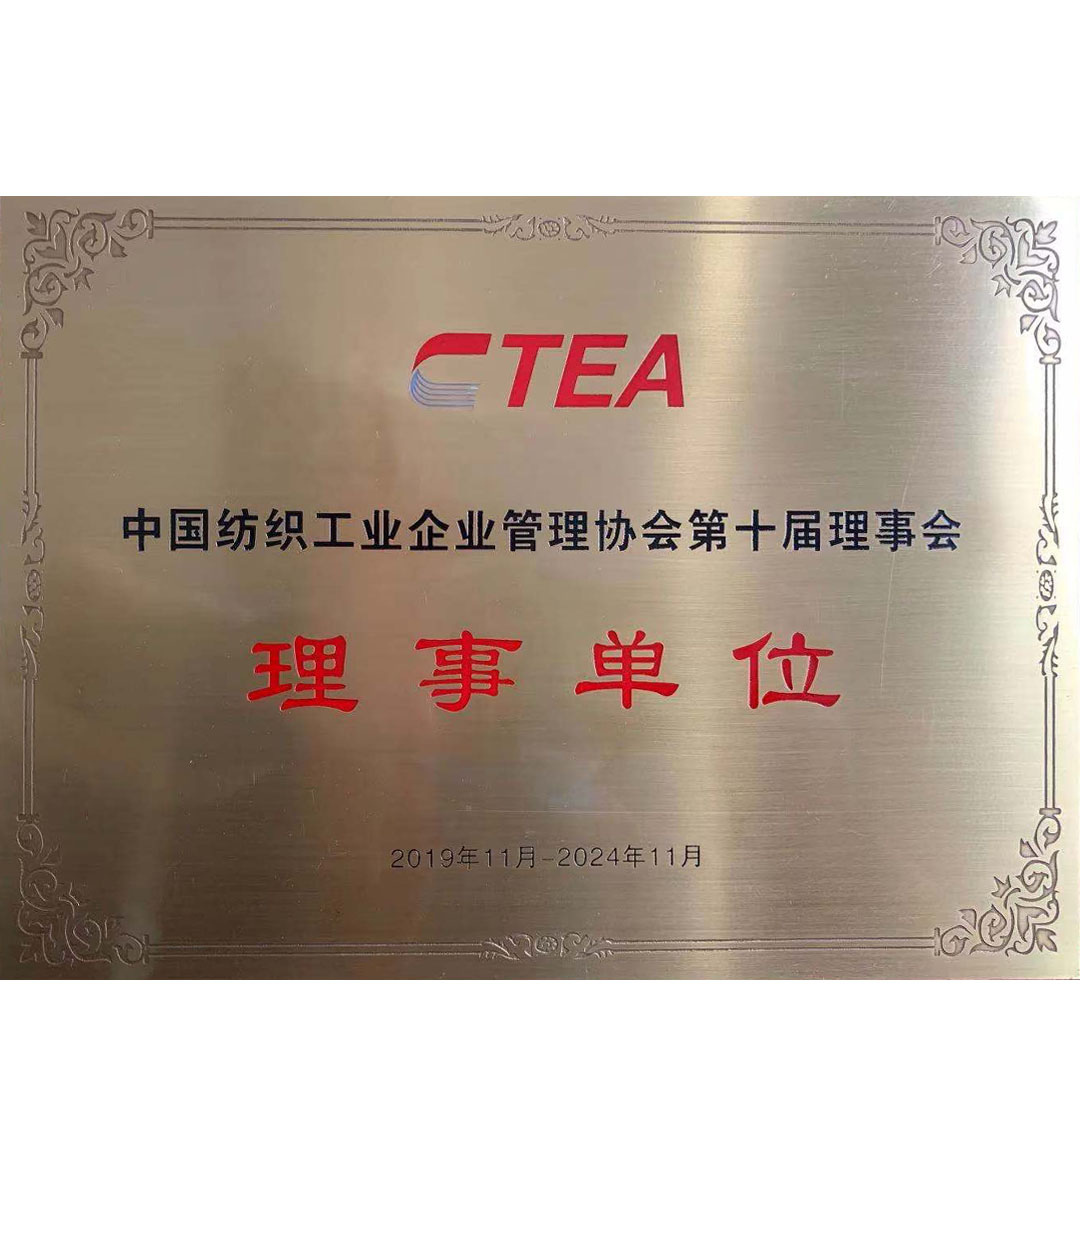 Product award certificate